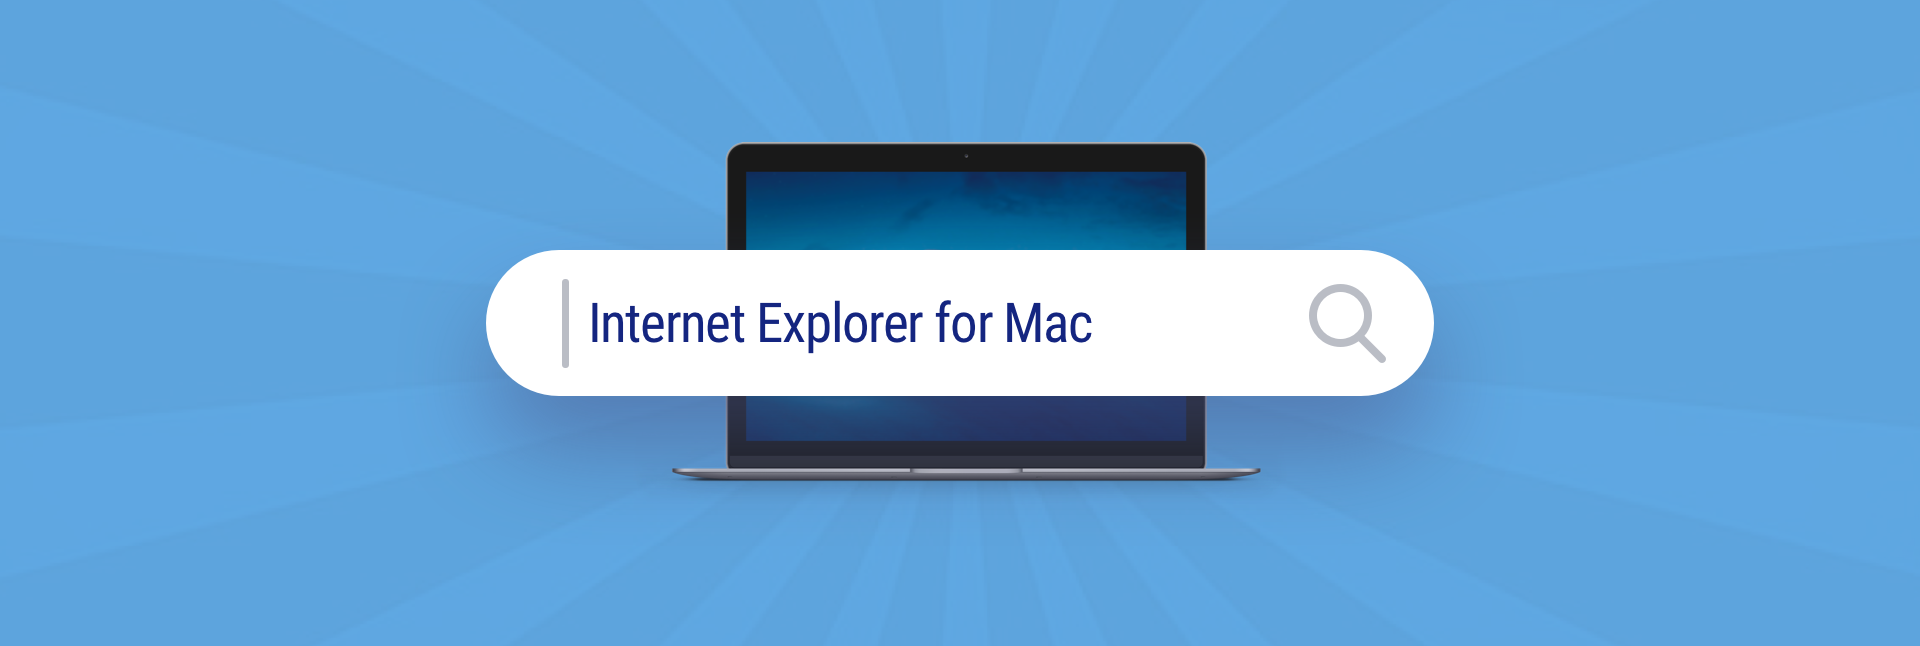 windows explorer for mac download